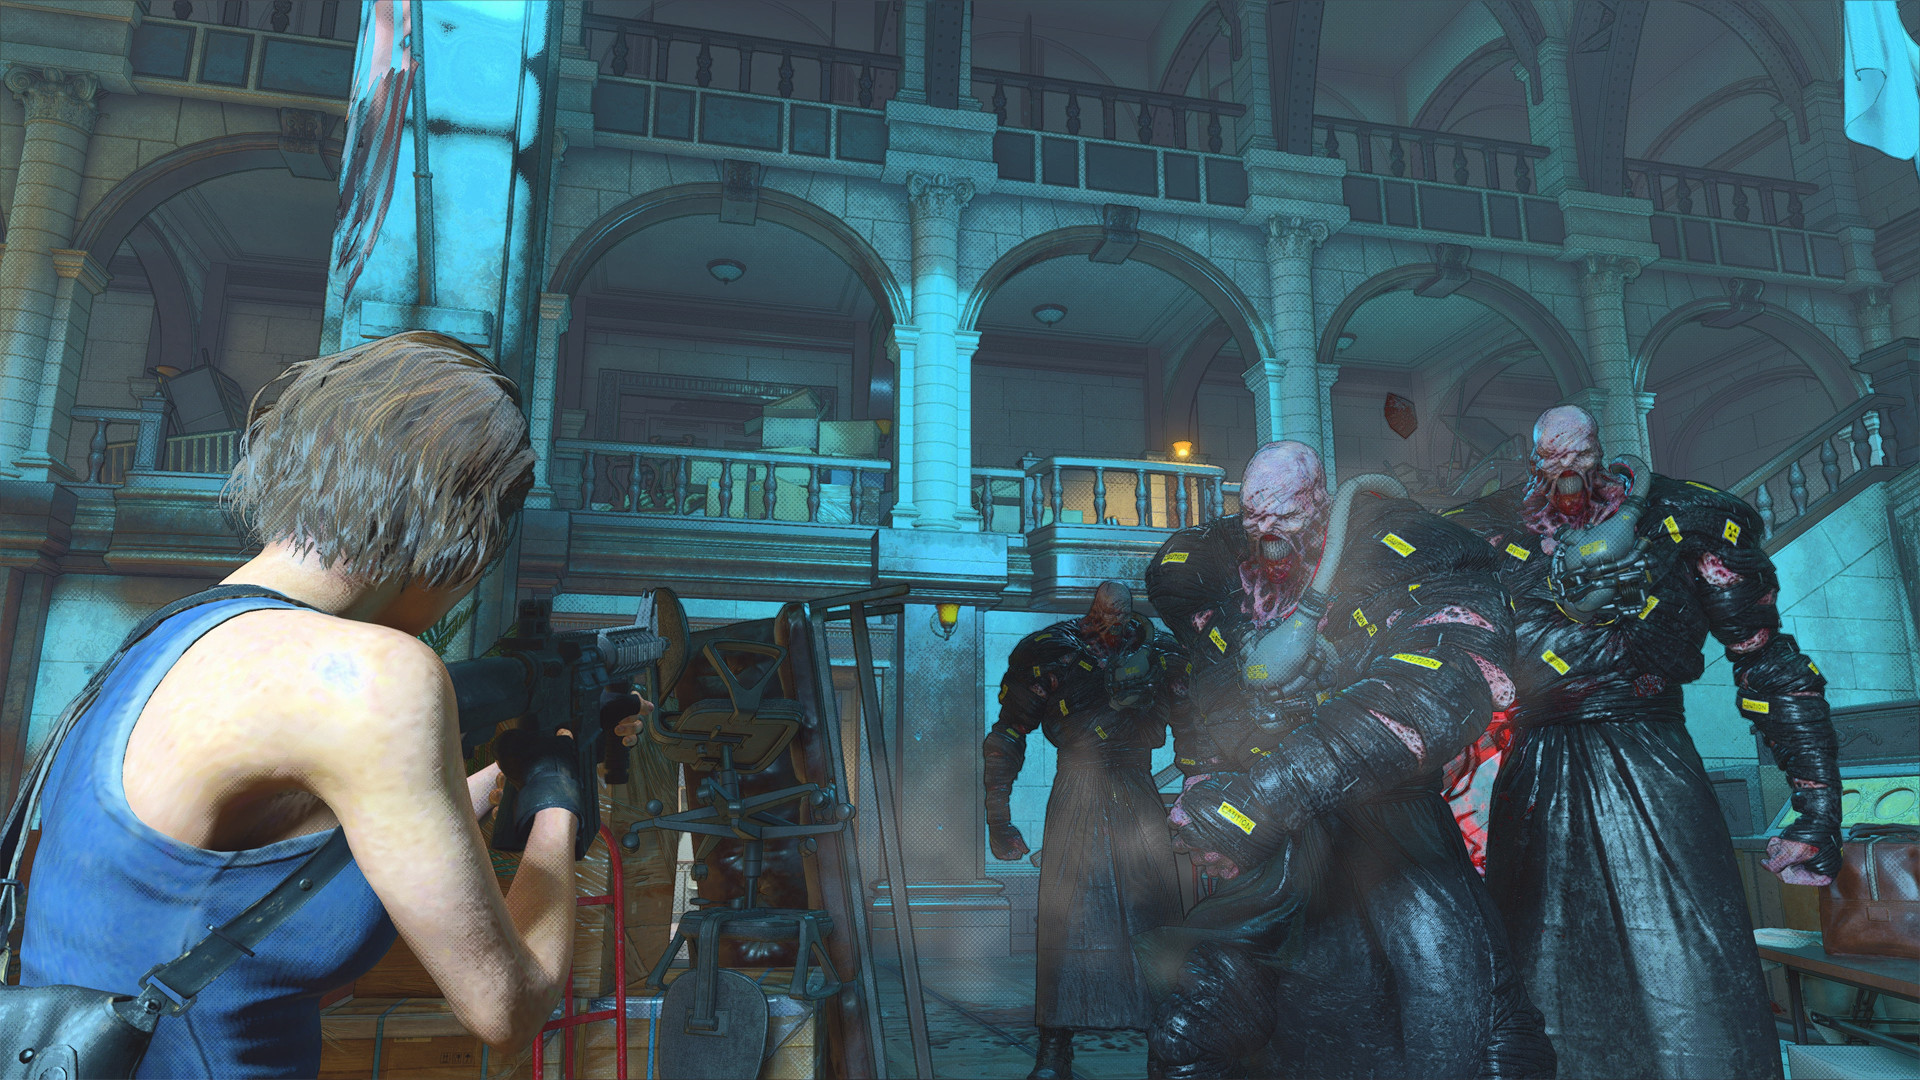 Resident Evil Re:Verse EU PS4 CD Key